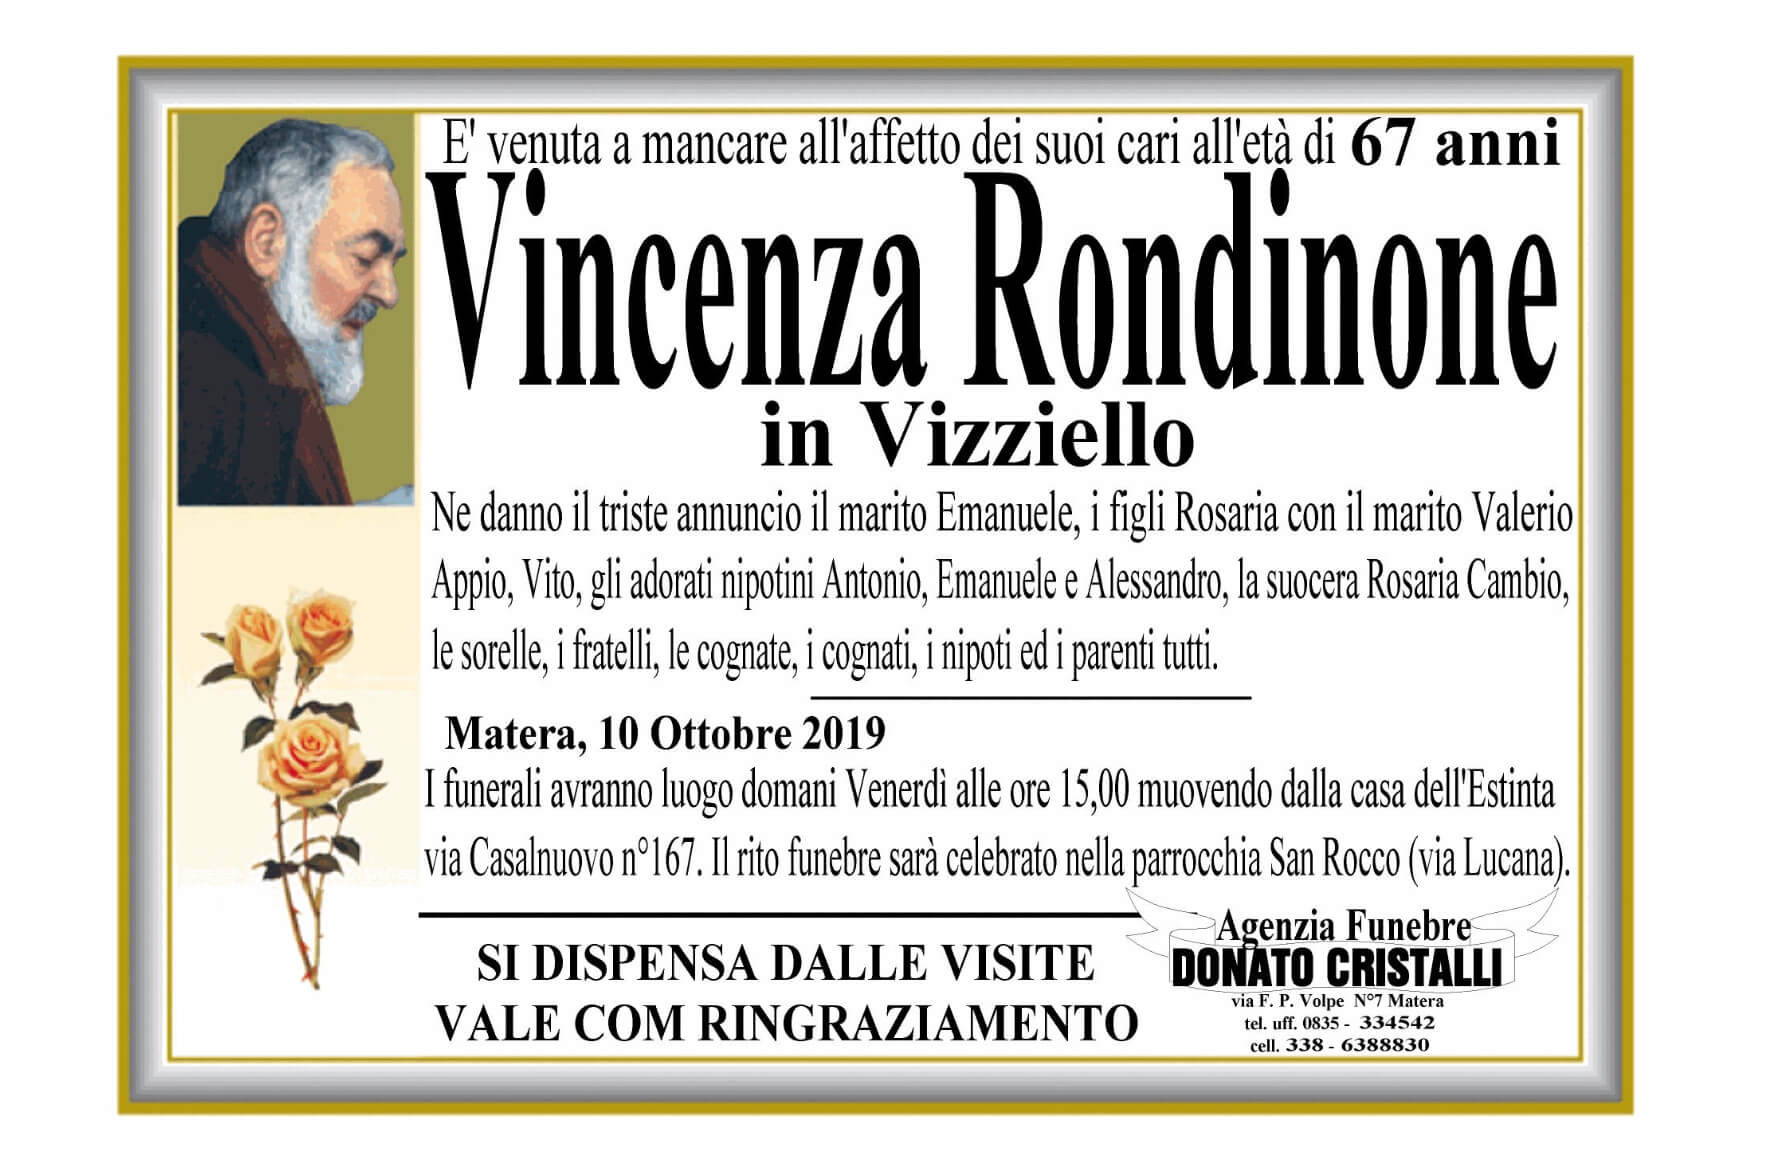 Vincenza Rondinone